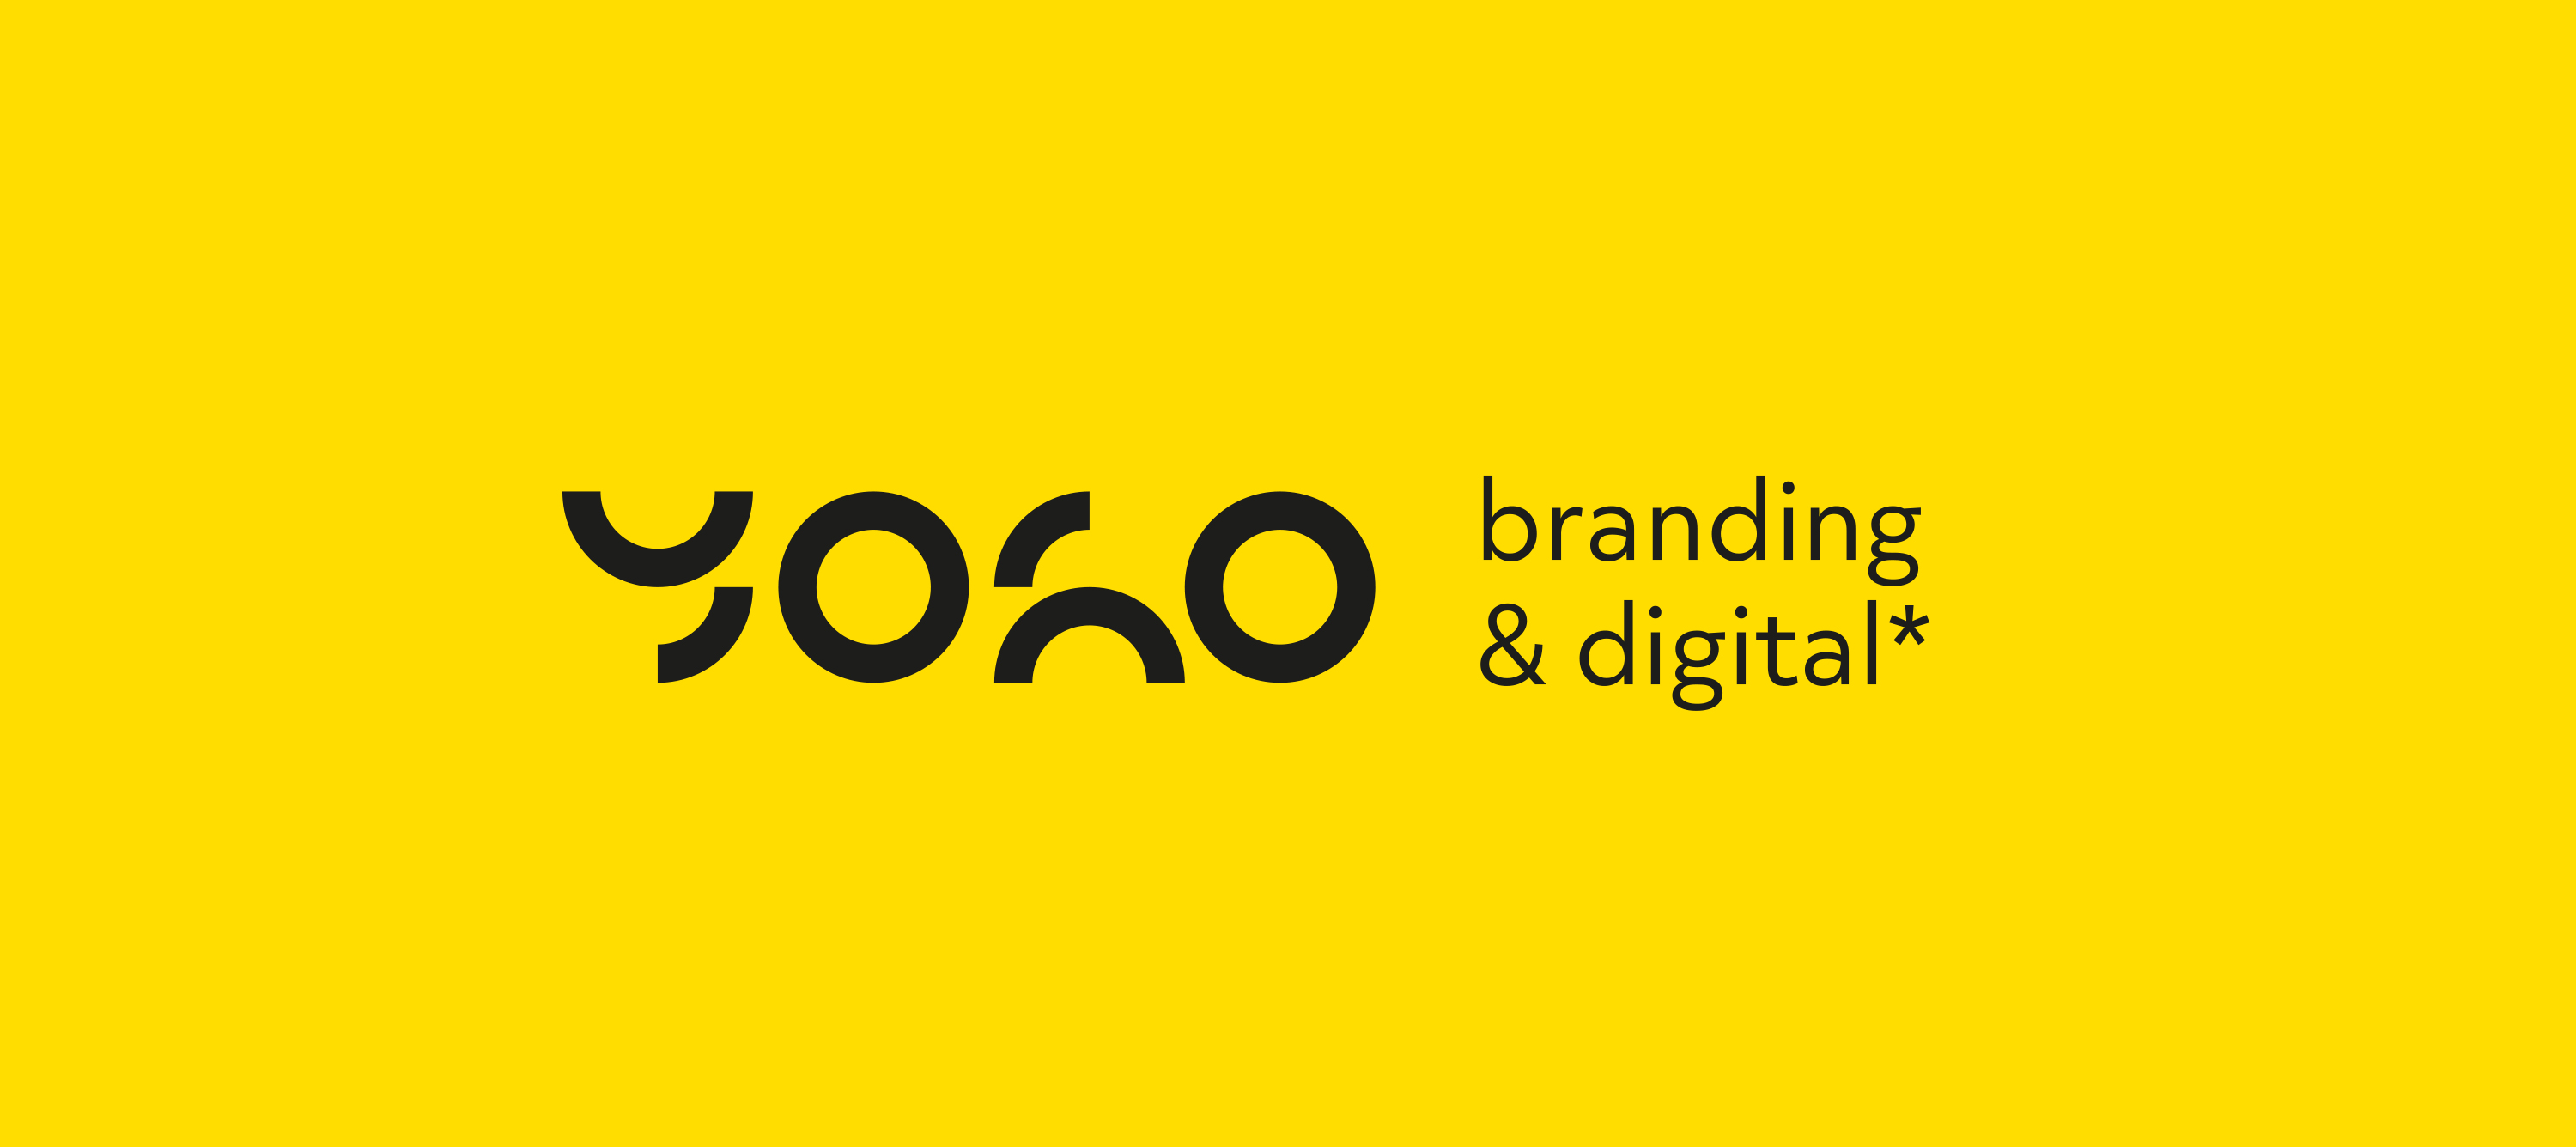 YOHO branding & digital